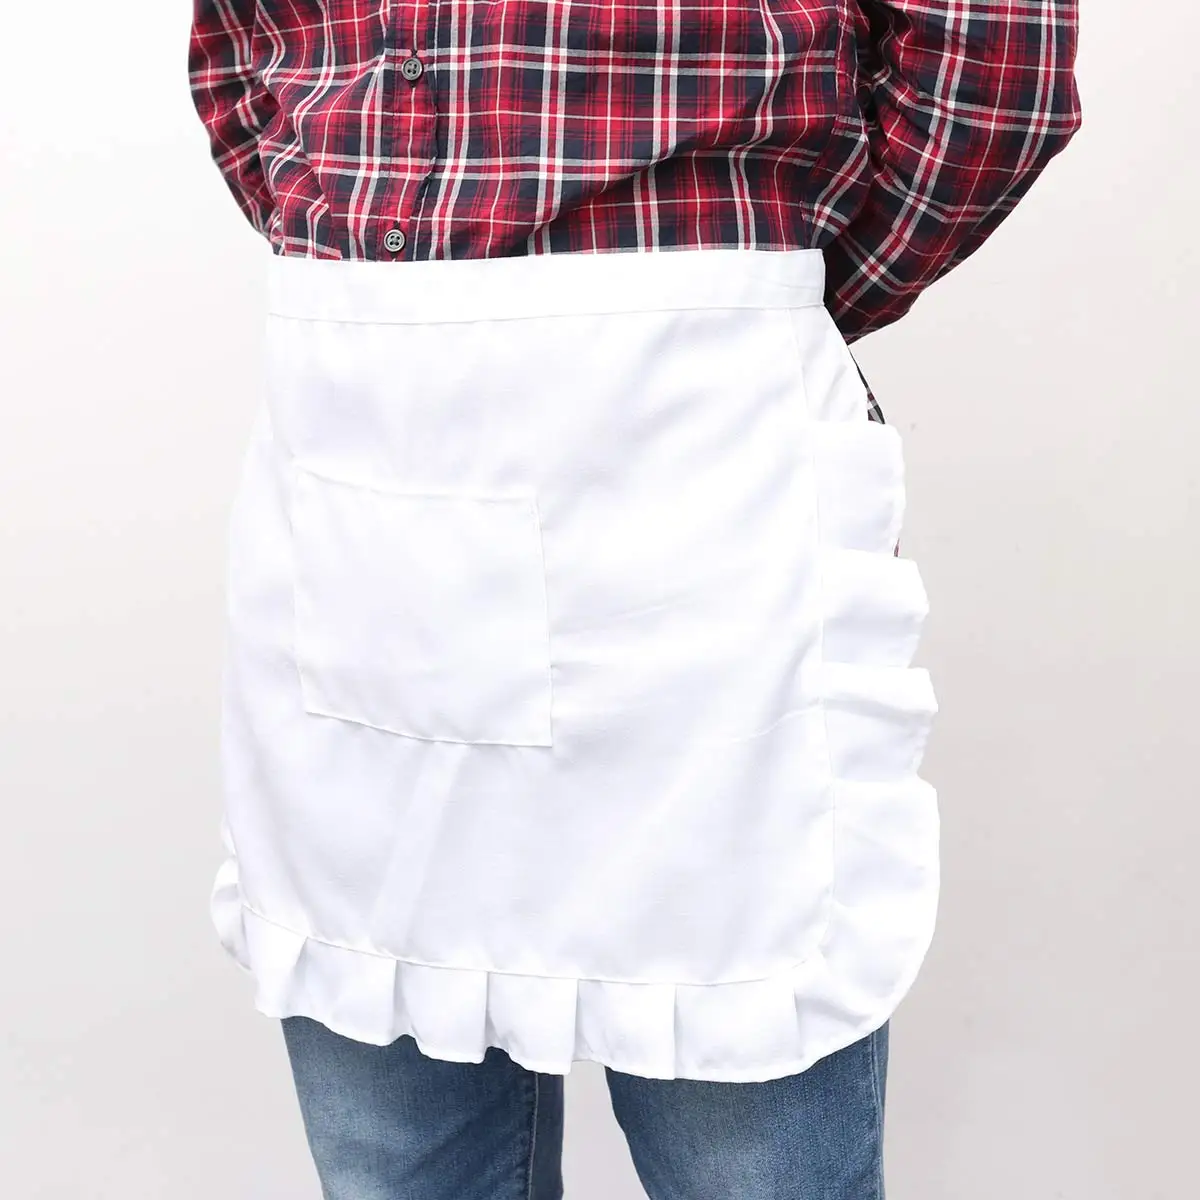 1pcs Kitchen Apron Lace Bib Maid Costume Half Waist With Pocket Kitchen Party Favors For Women Waitress  Black White  A50 images - 6